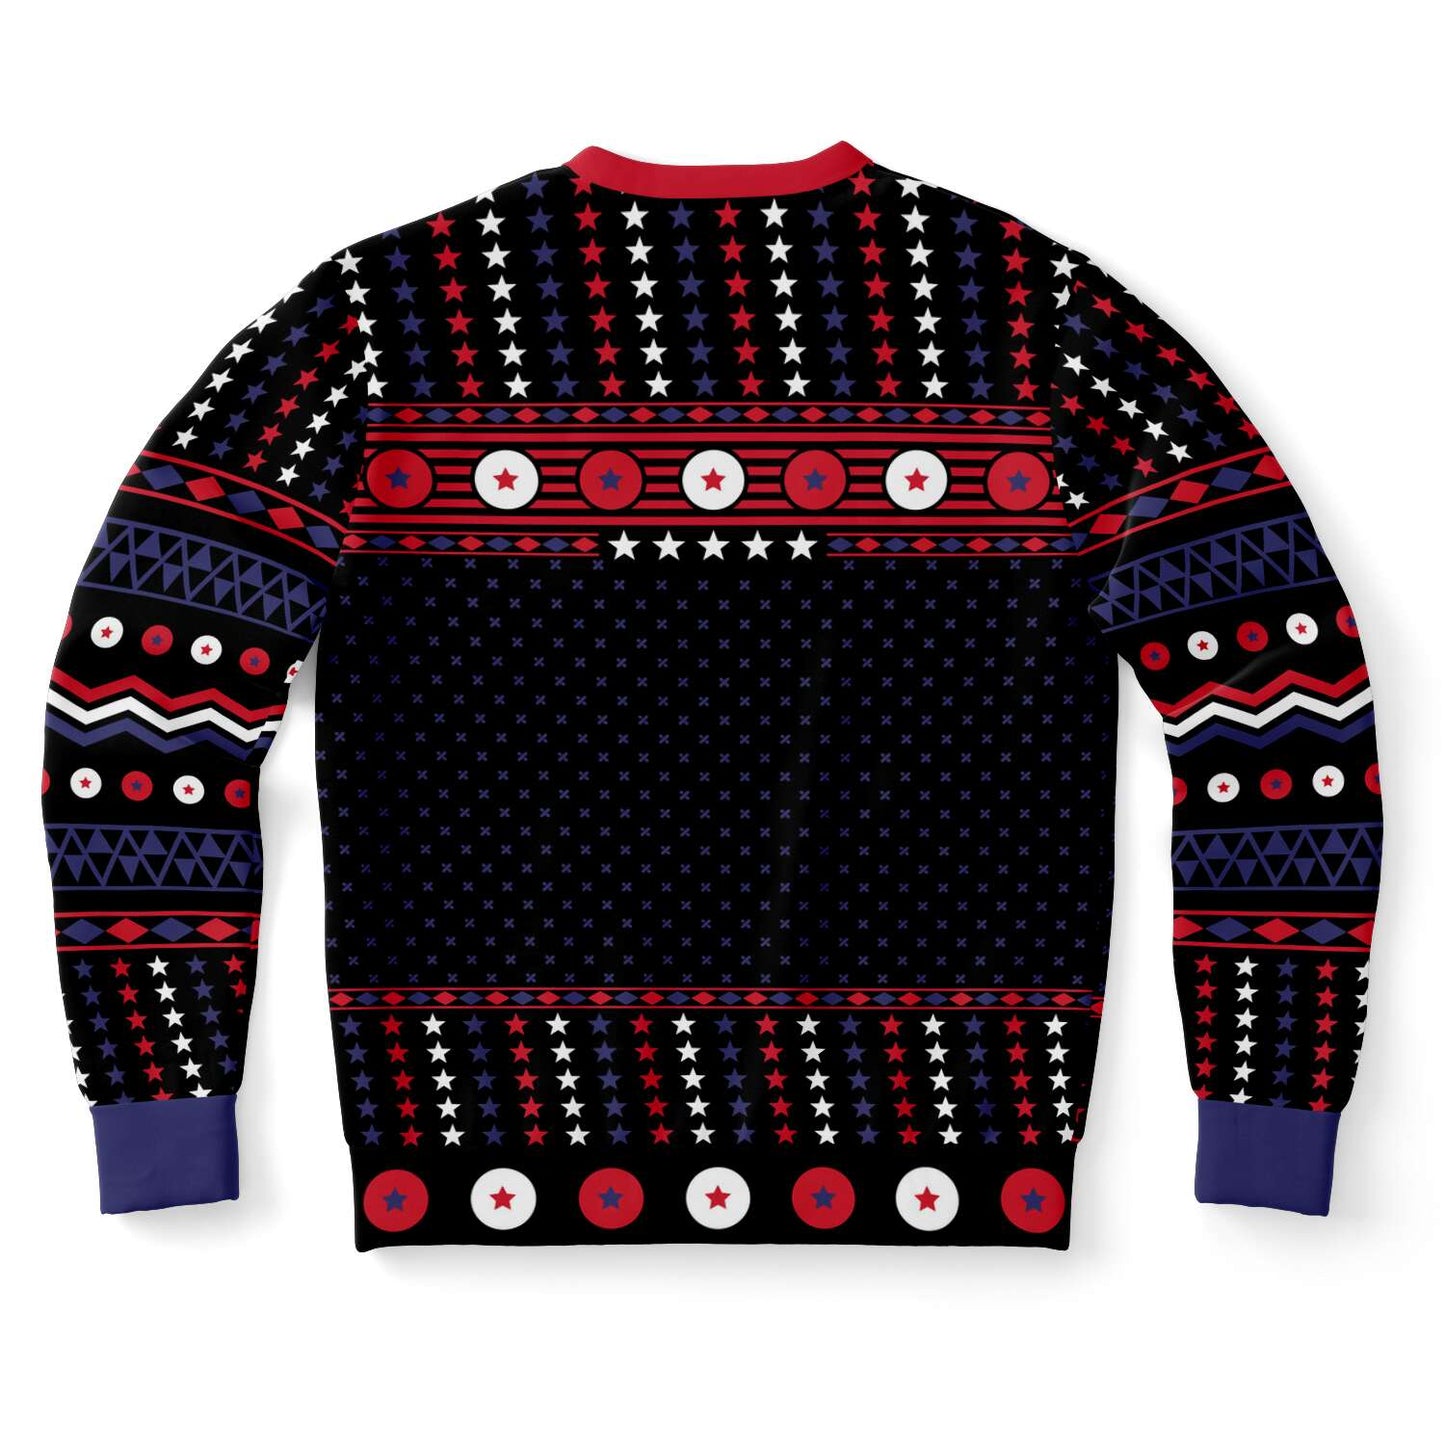 Let's Go Brandon - Funny Anti-Biden Republican Ugly Christmas Sweater (Sweatshirt)